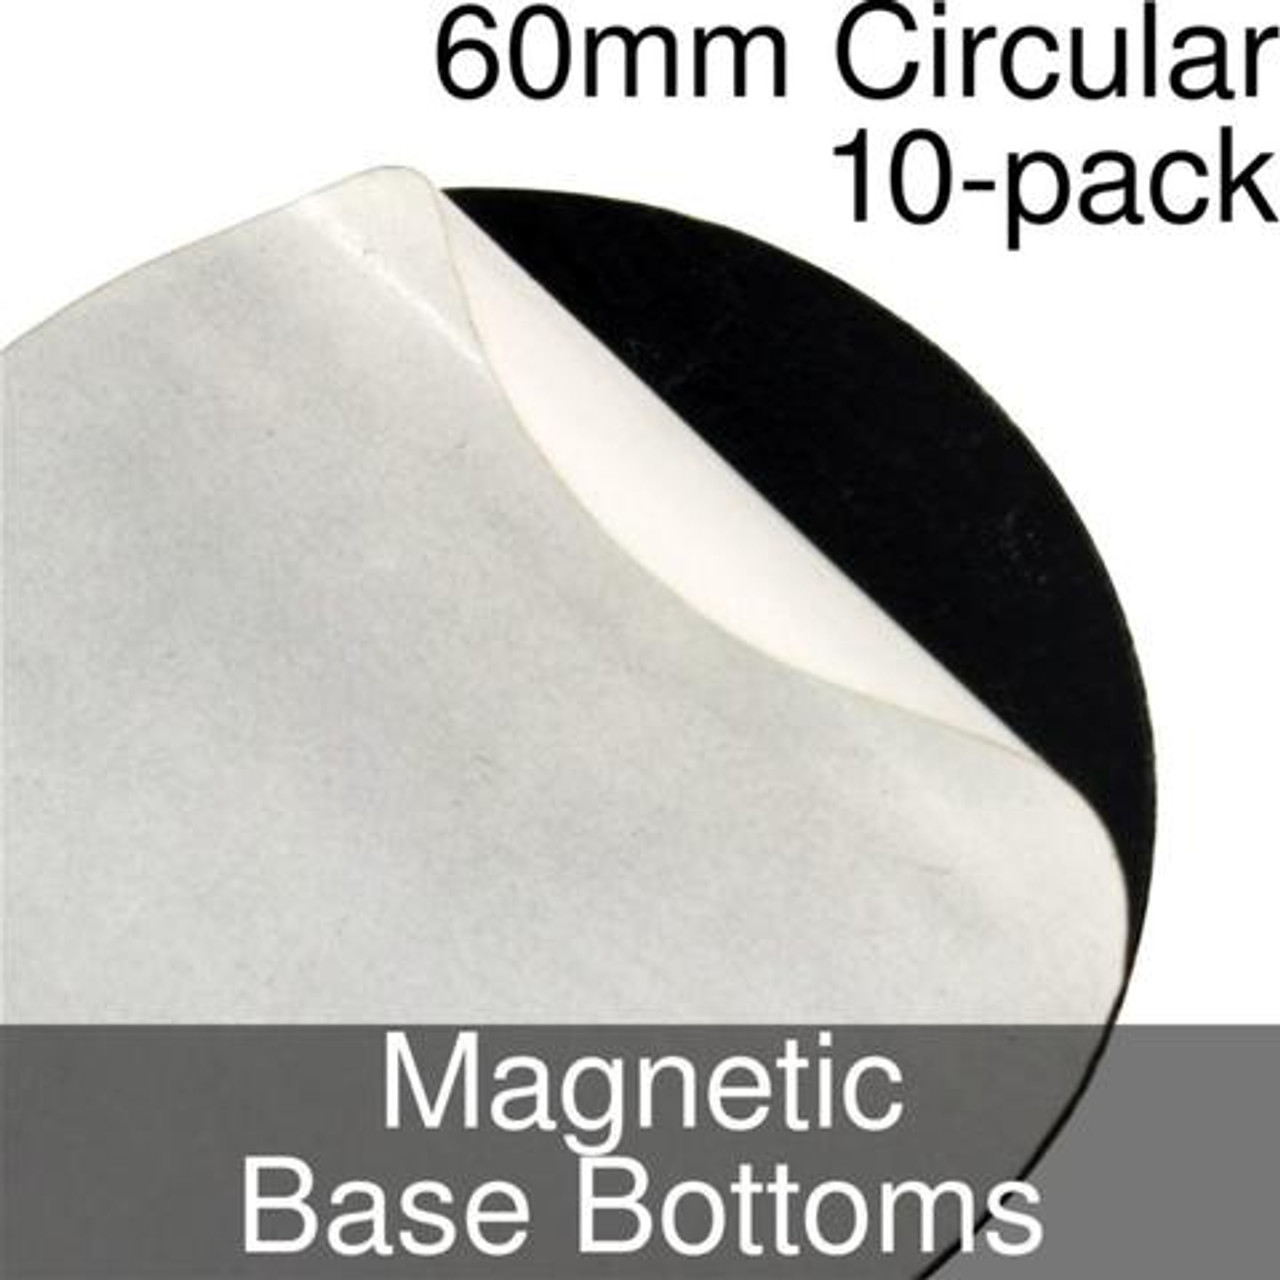 60mm Circular Self Adhesive Magnetic Base Bottom 10 count